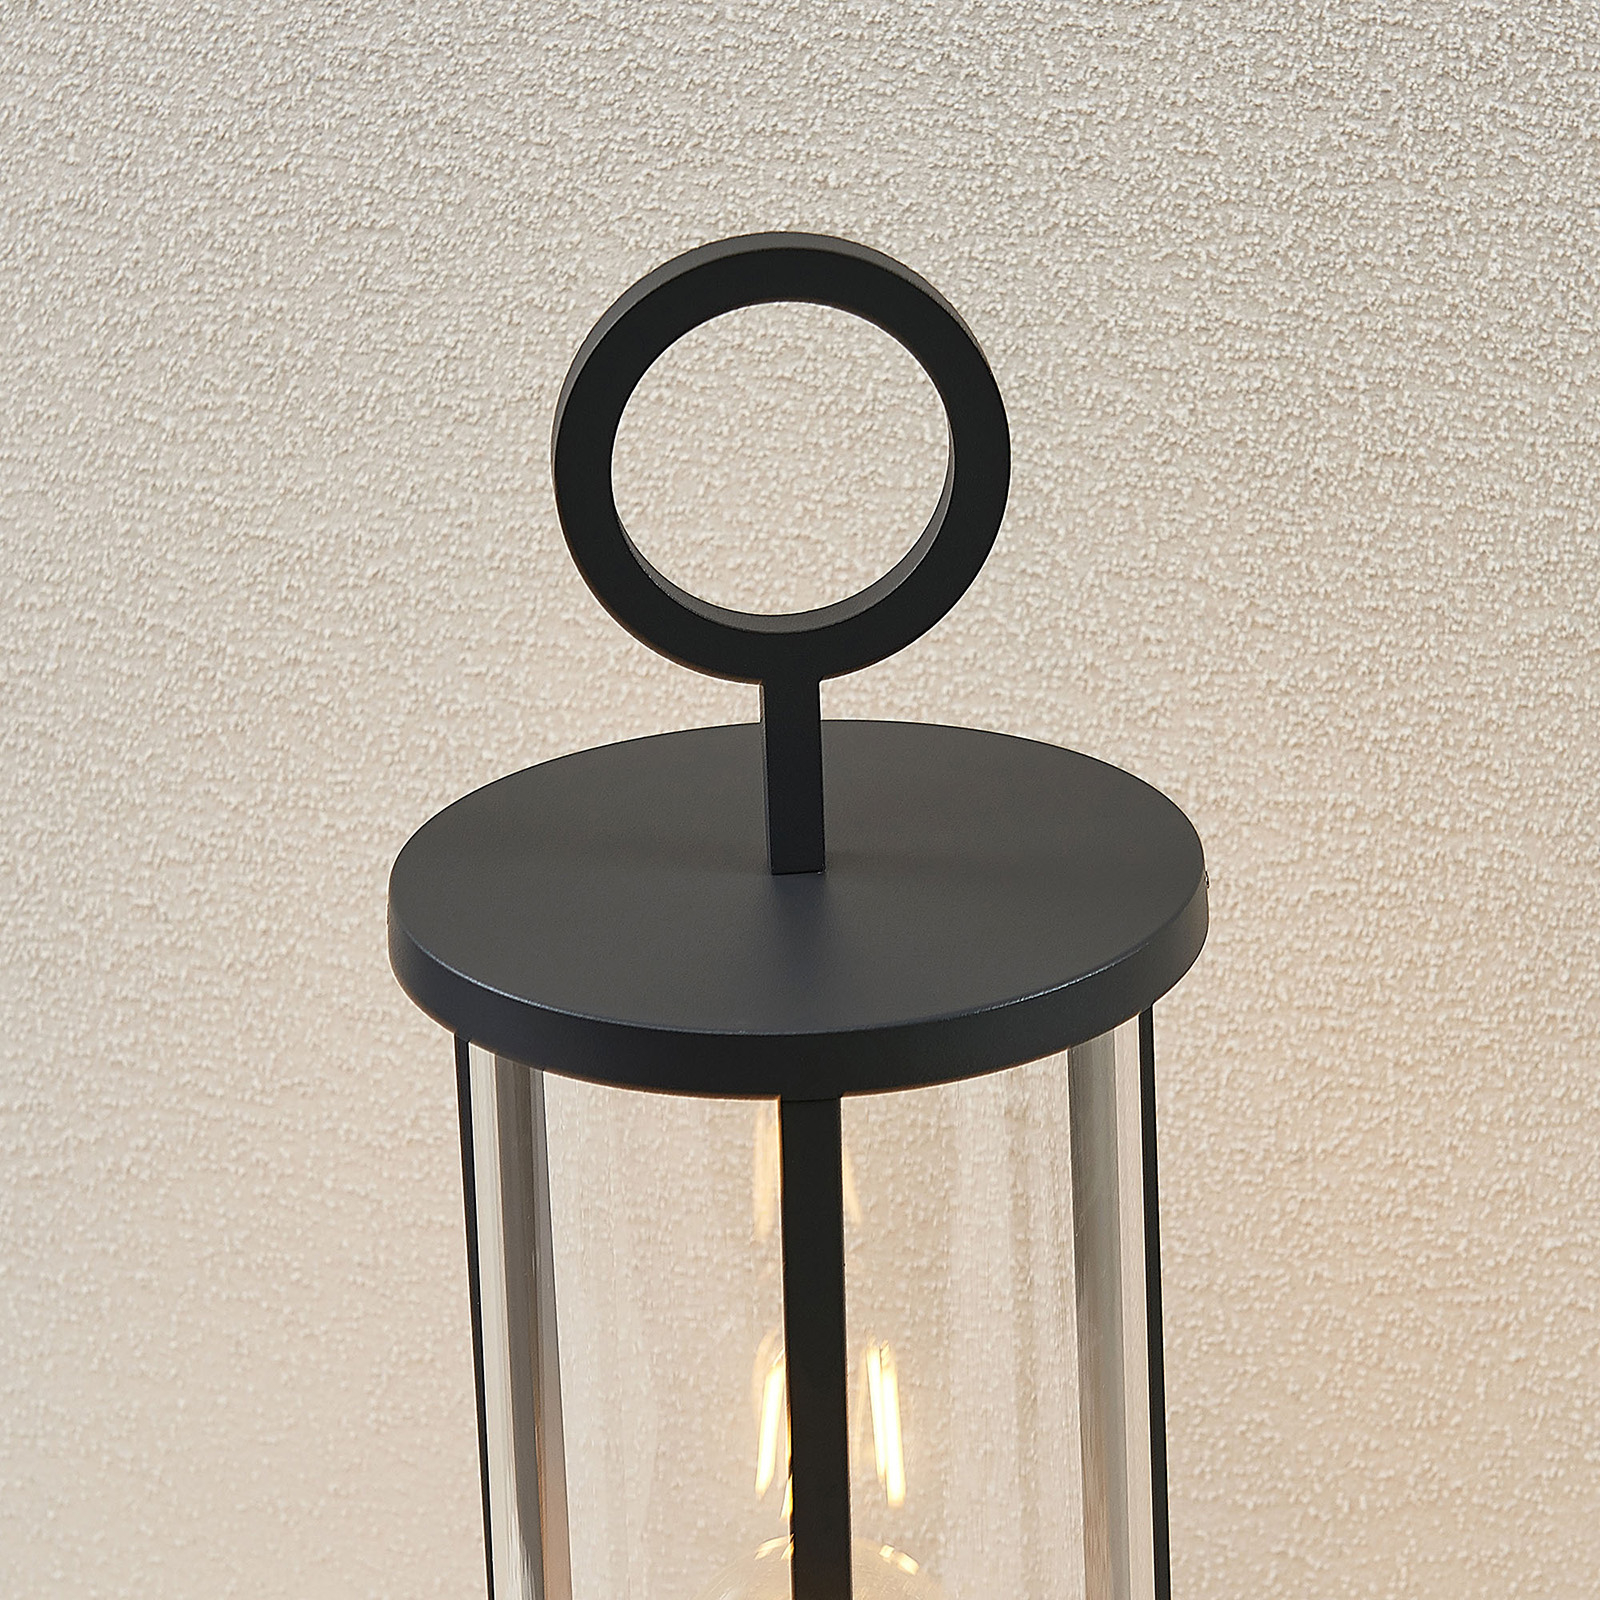 Lucande Emmeline pillar light, 34 cm high